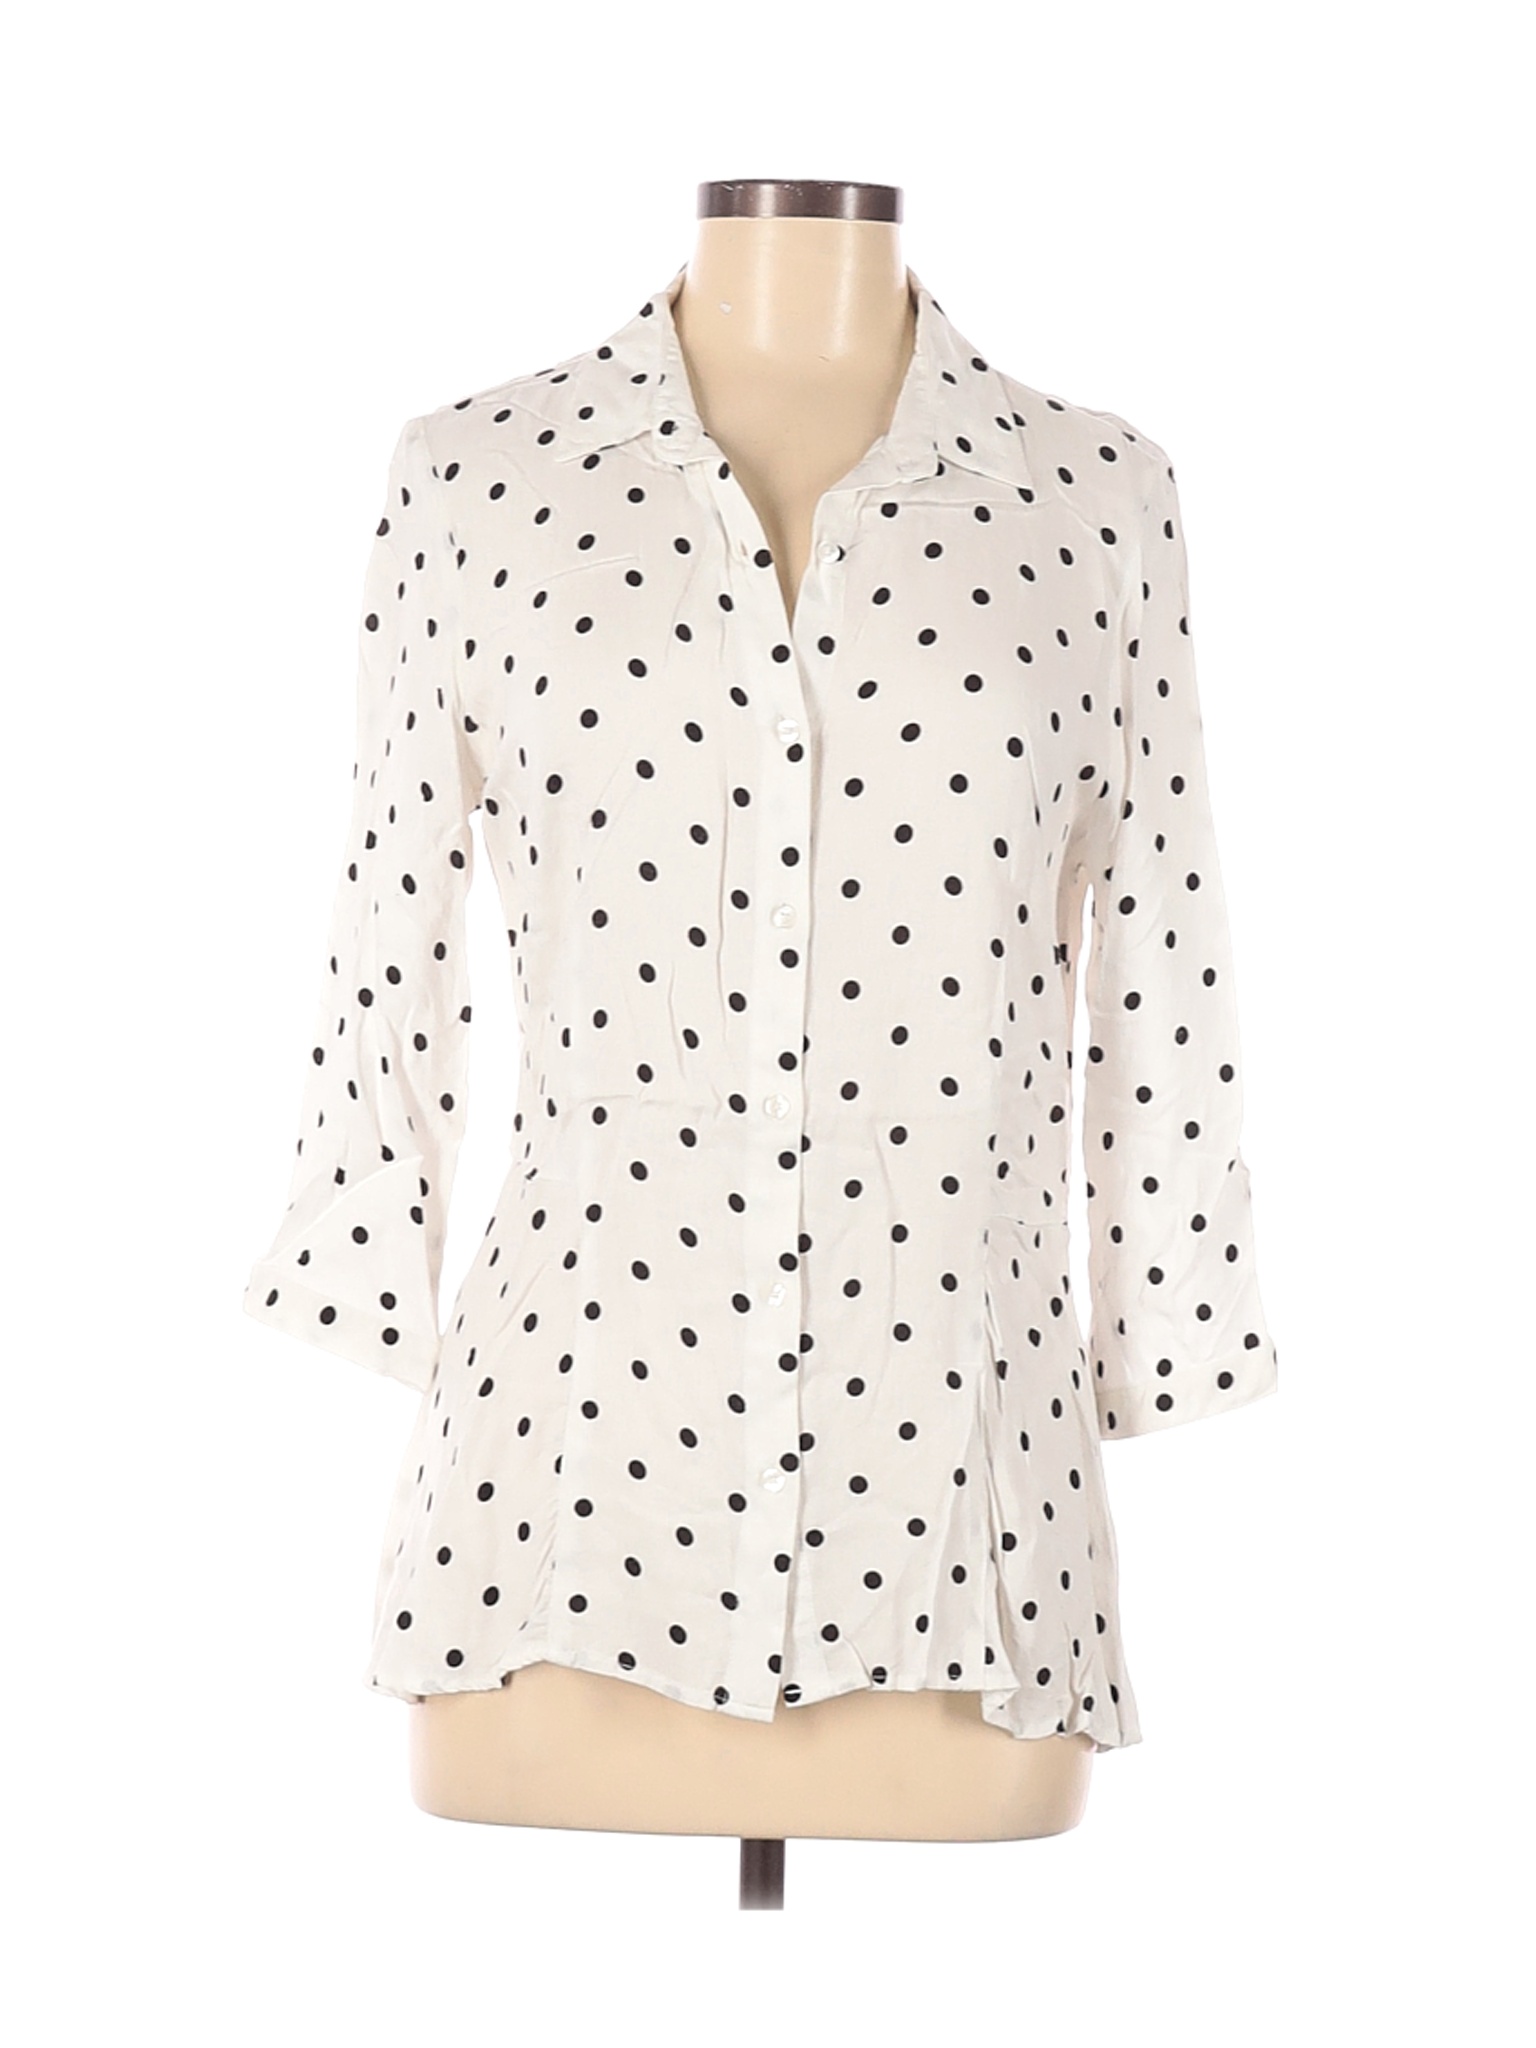 IZOD Women White 3/4 Sleeve Button-Down Shirt M | eBay